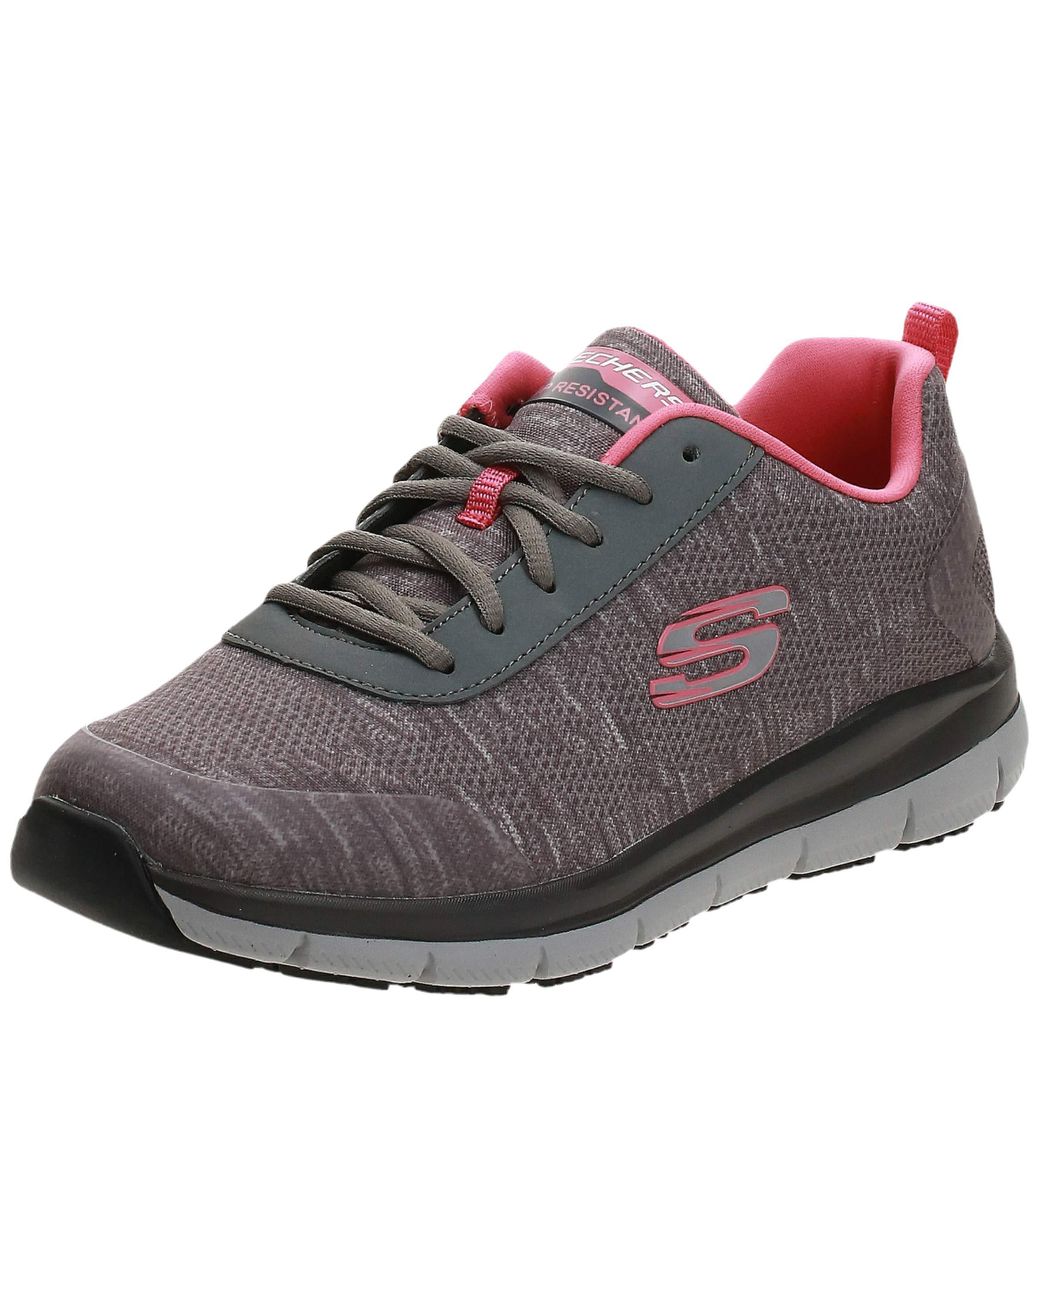 Skechers Comfort Flex Sr Hc Pro Health Care Professional Shoe,gray/pink ...